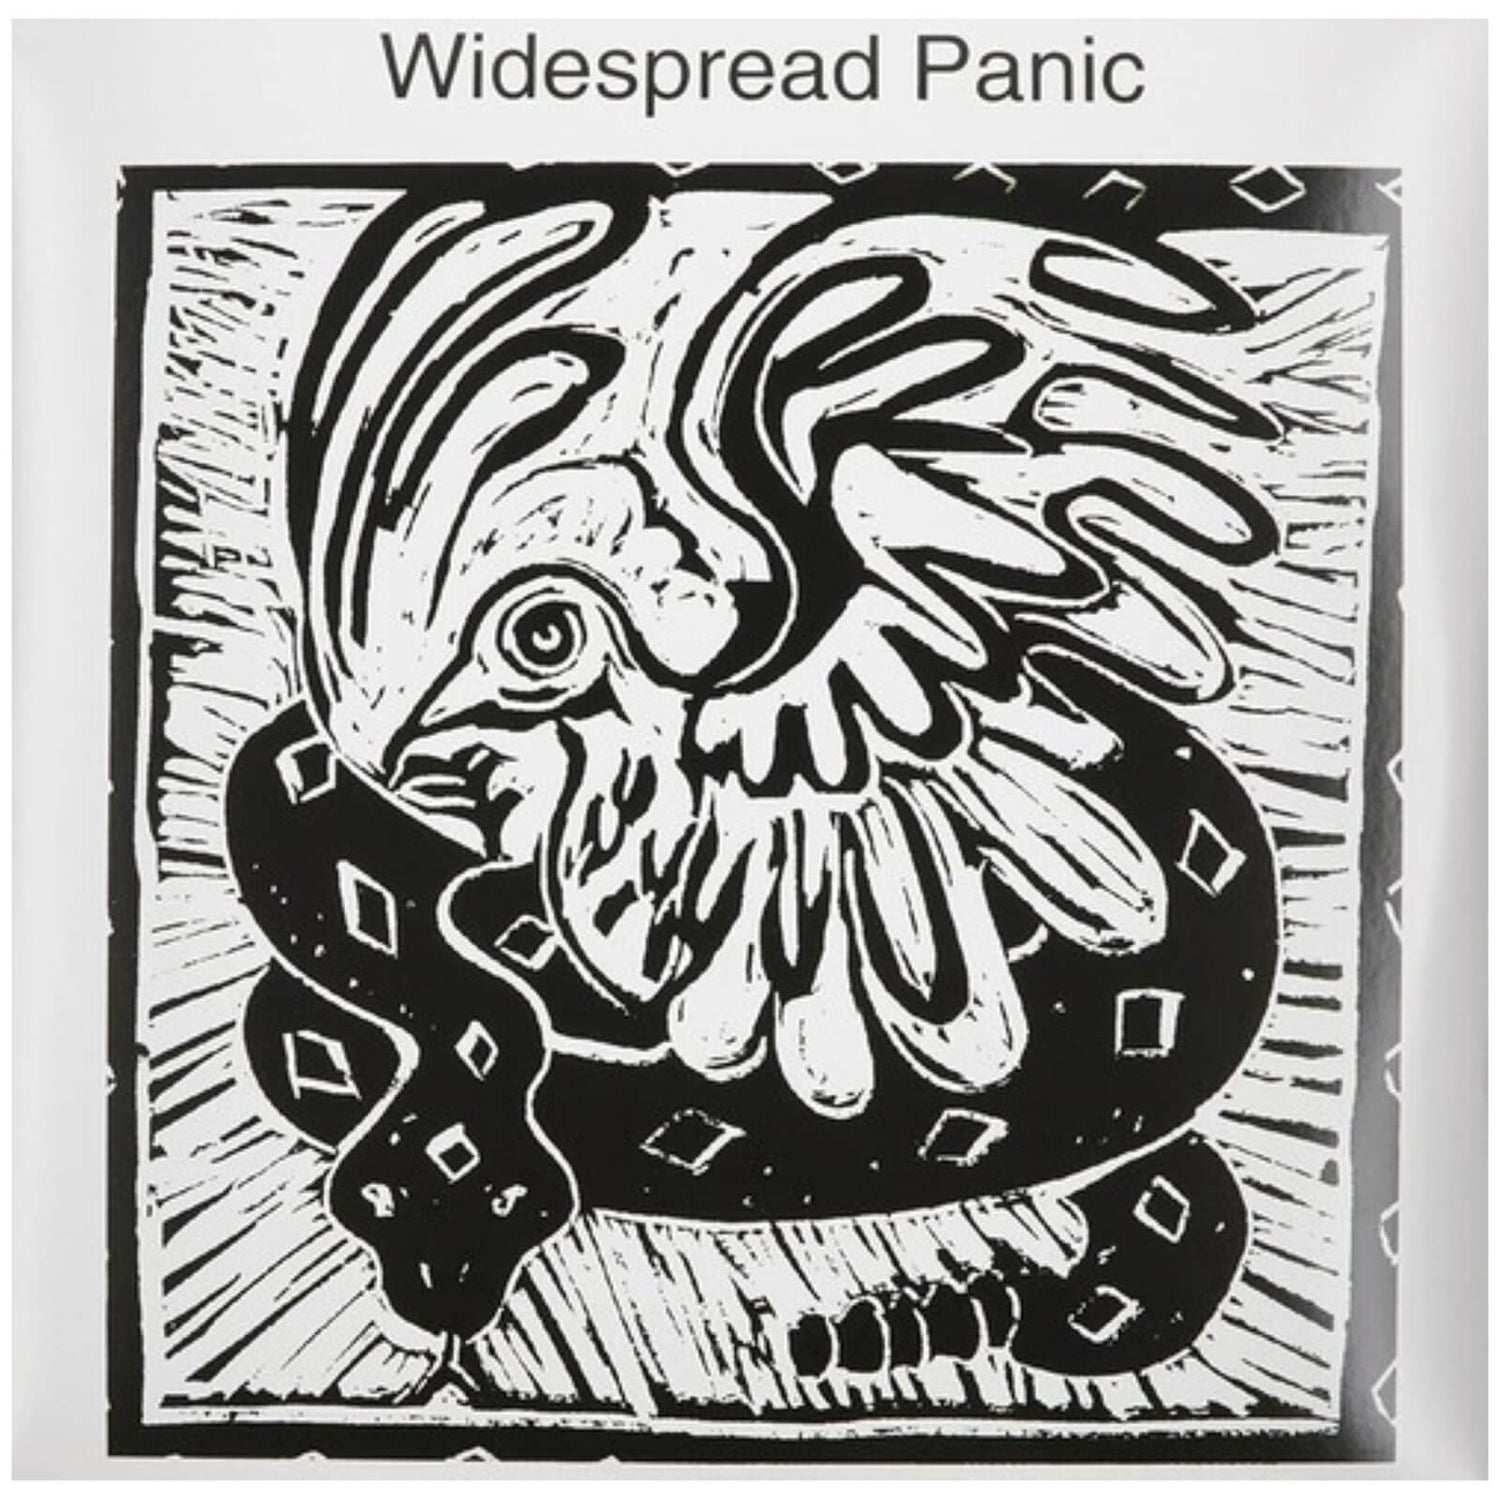 Widespread Panic - Widespread Panic Vinyl 2LP (Black & White)